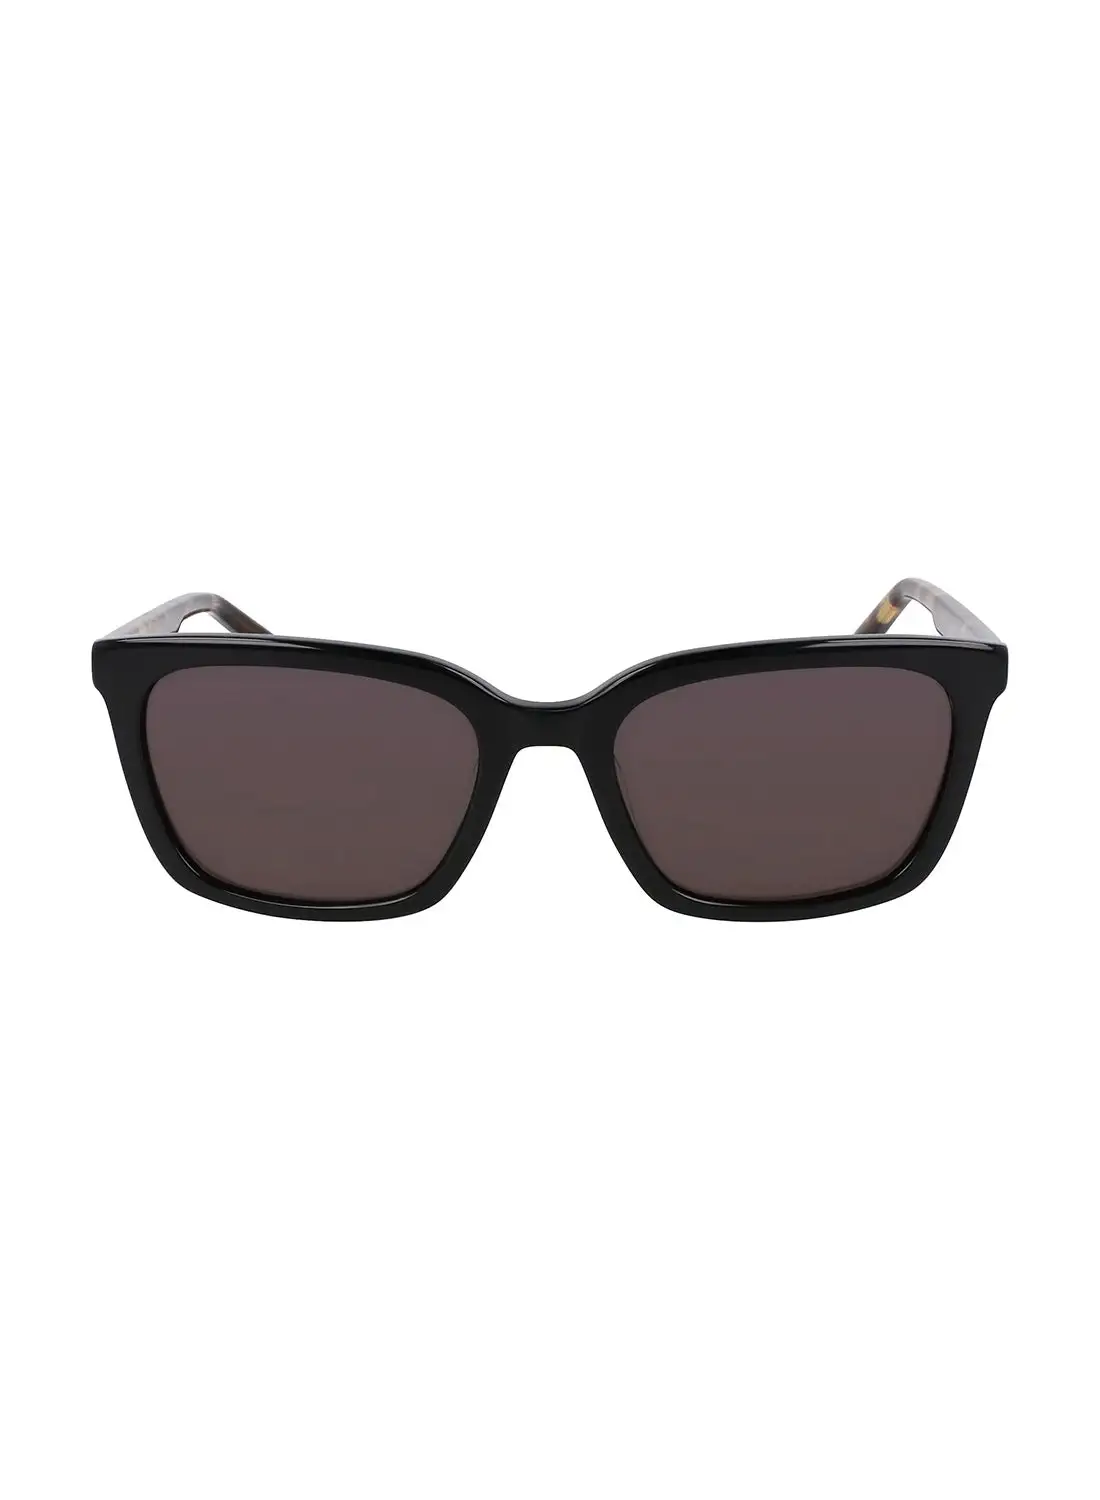 DKNY Women's Square Sunglasses - DK546S-001-5319 - Lens Size: 53 Mm